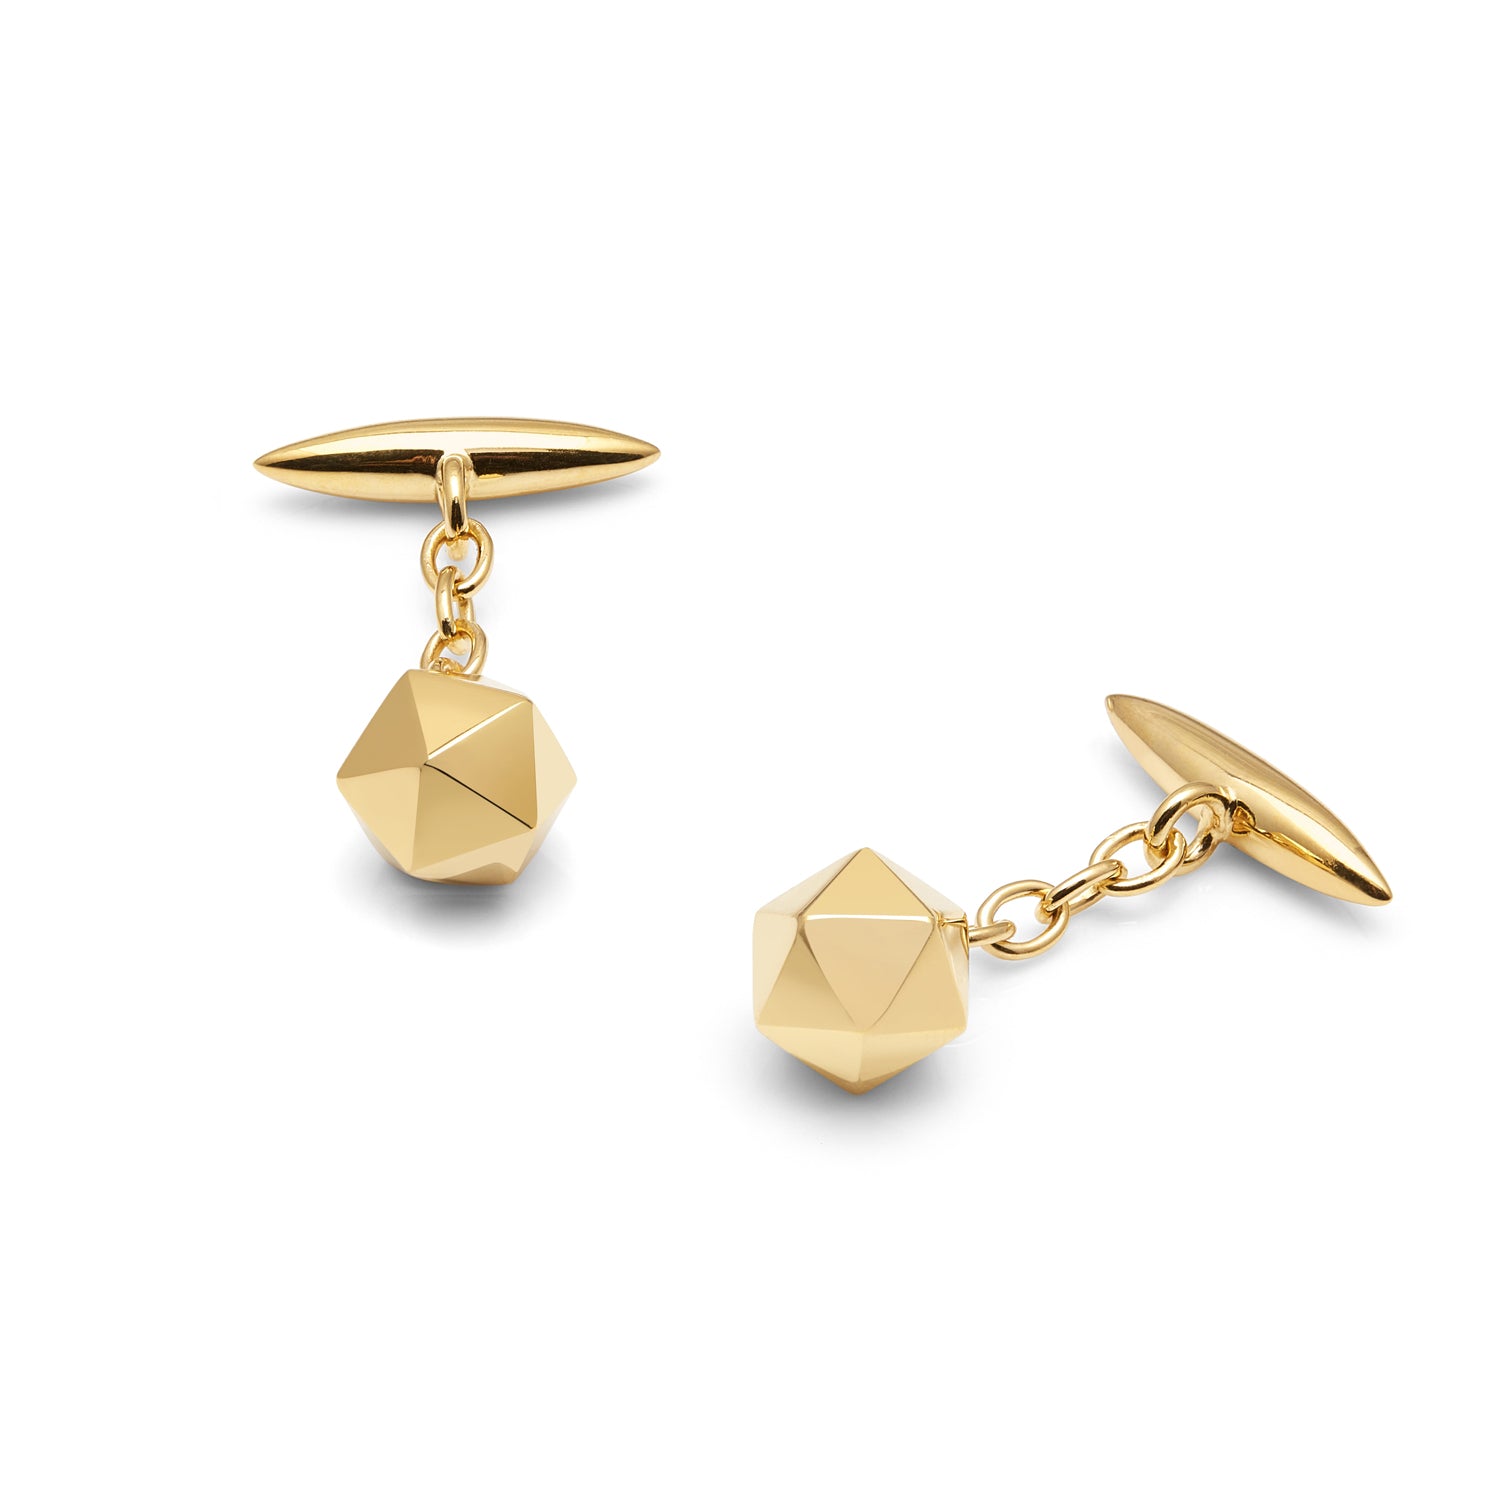 Icosahedron Cufflinks - Gold